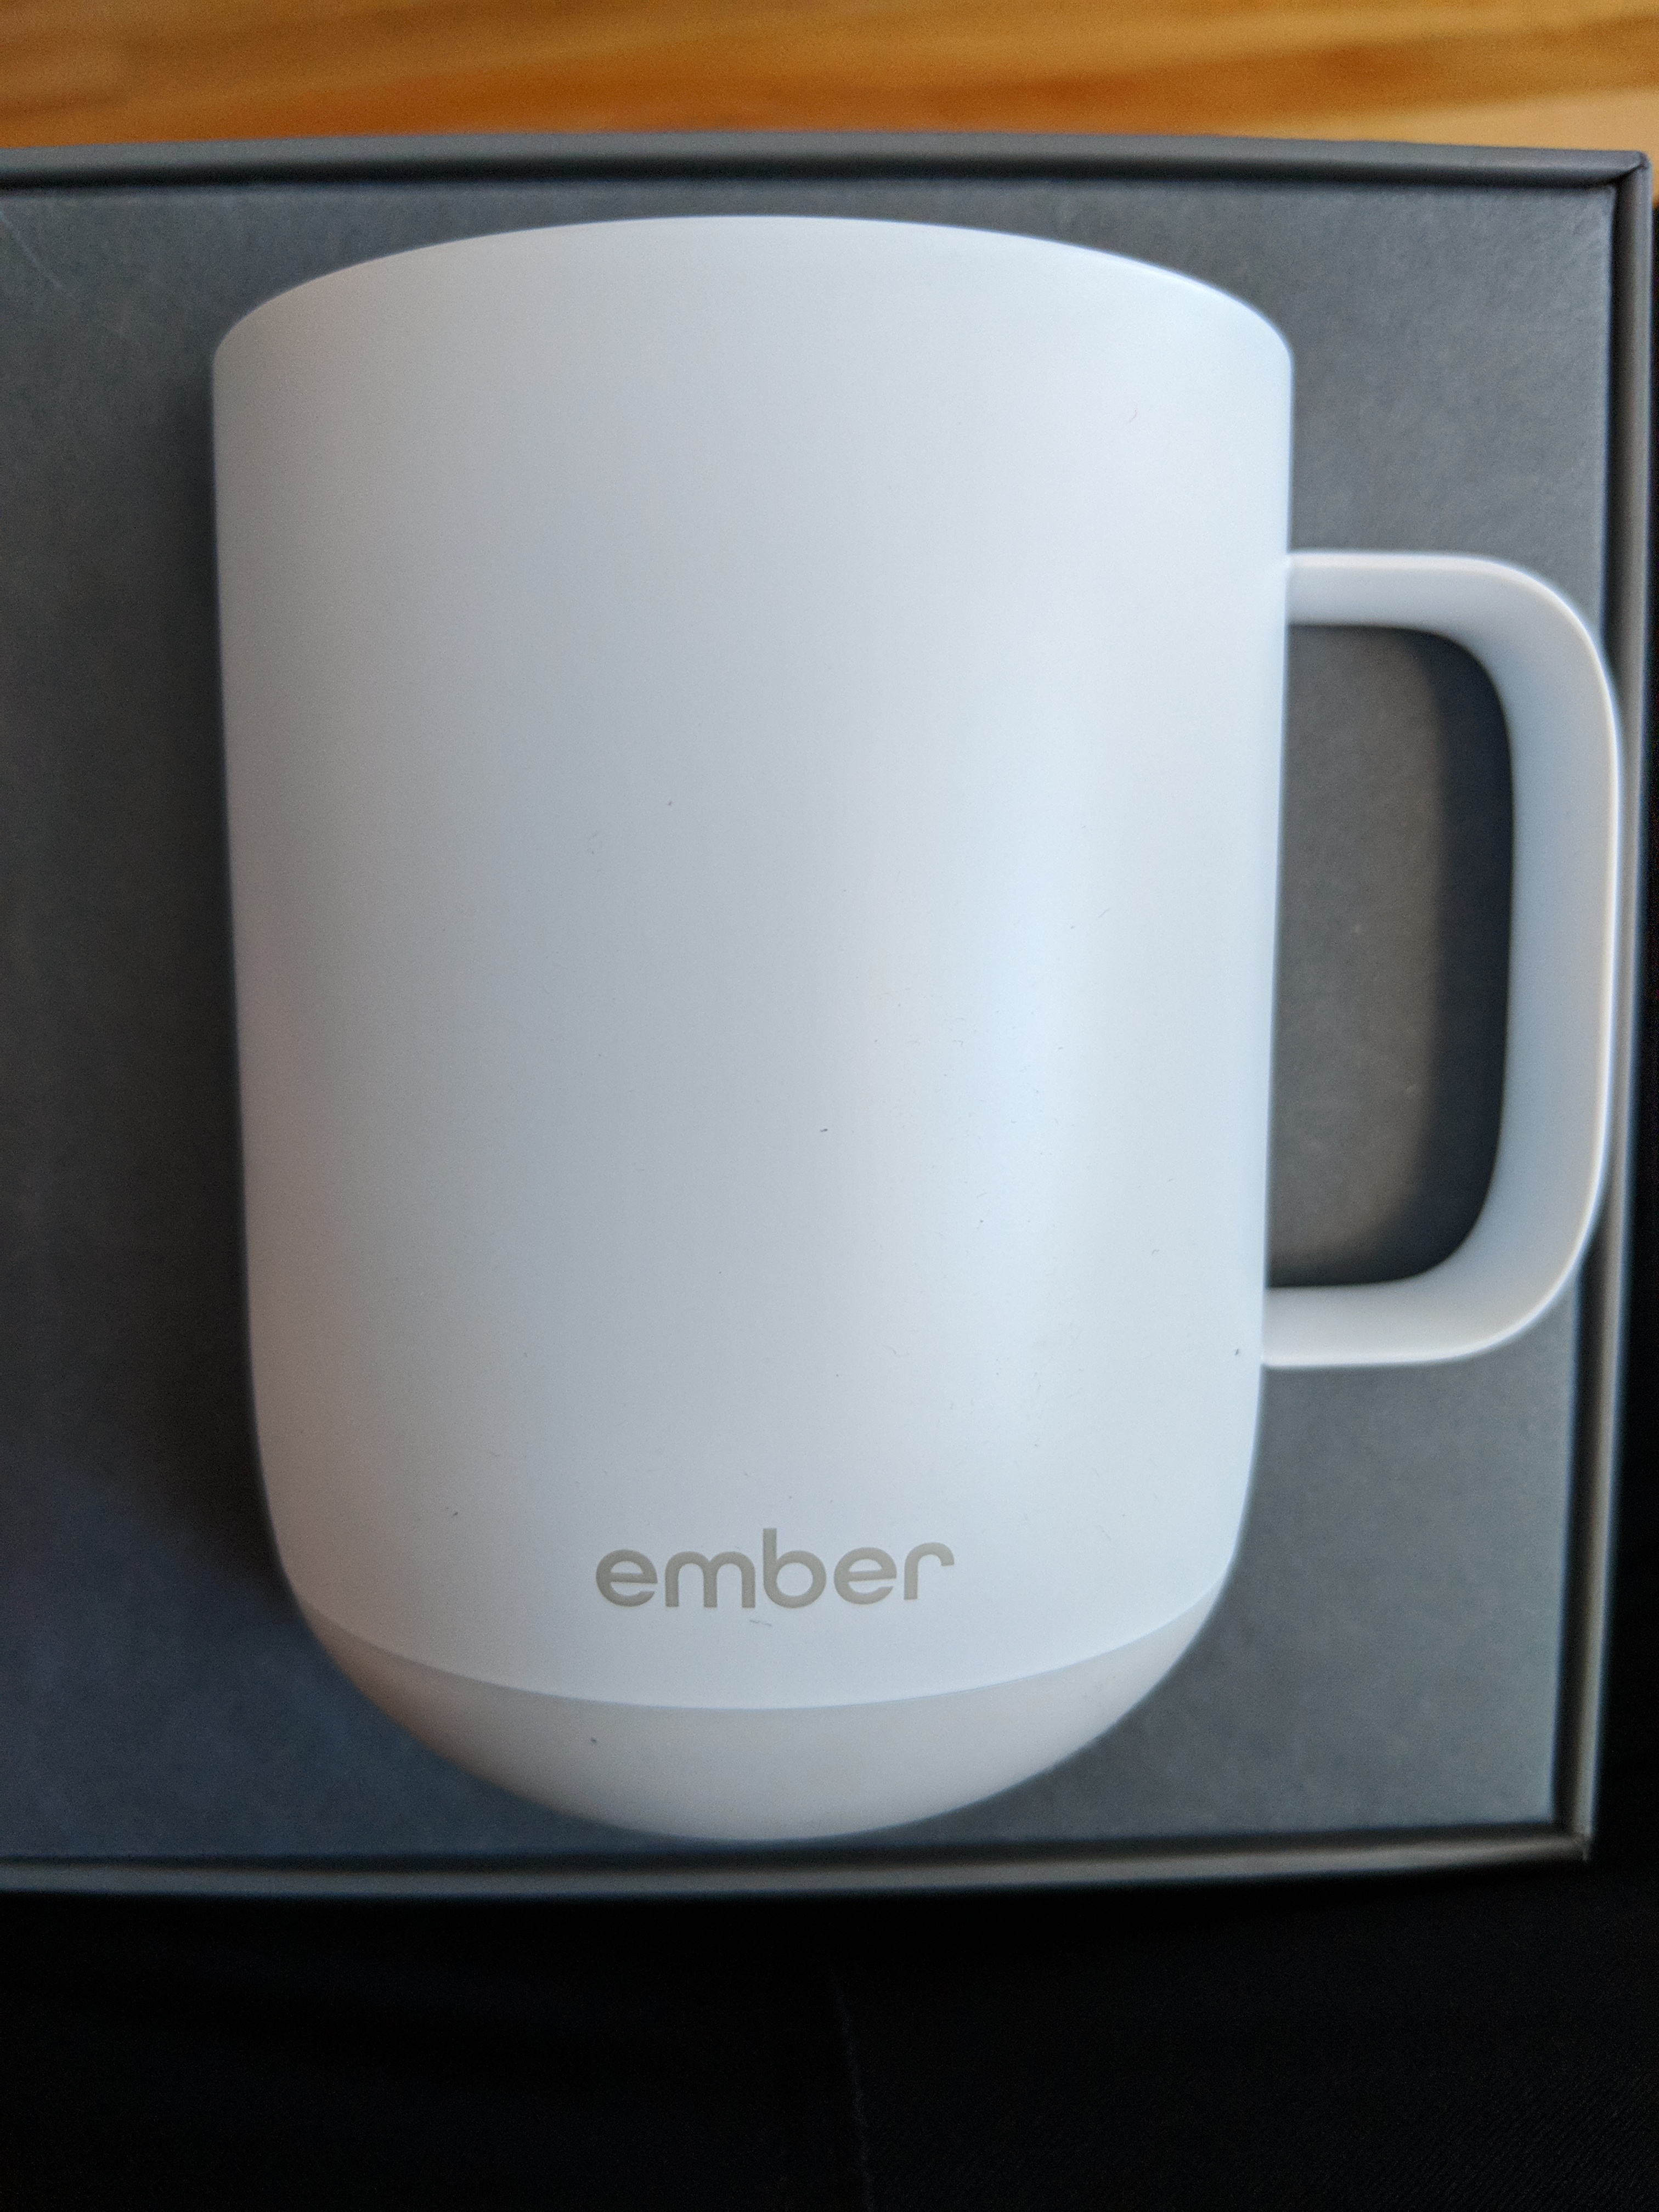 does ember mugs work